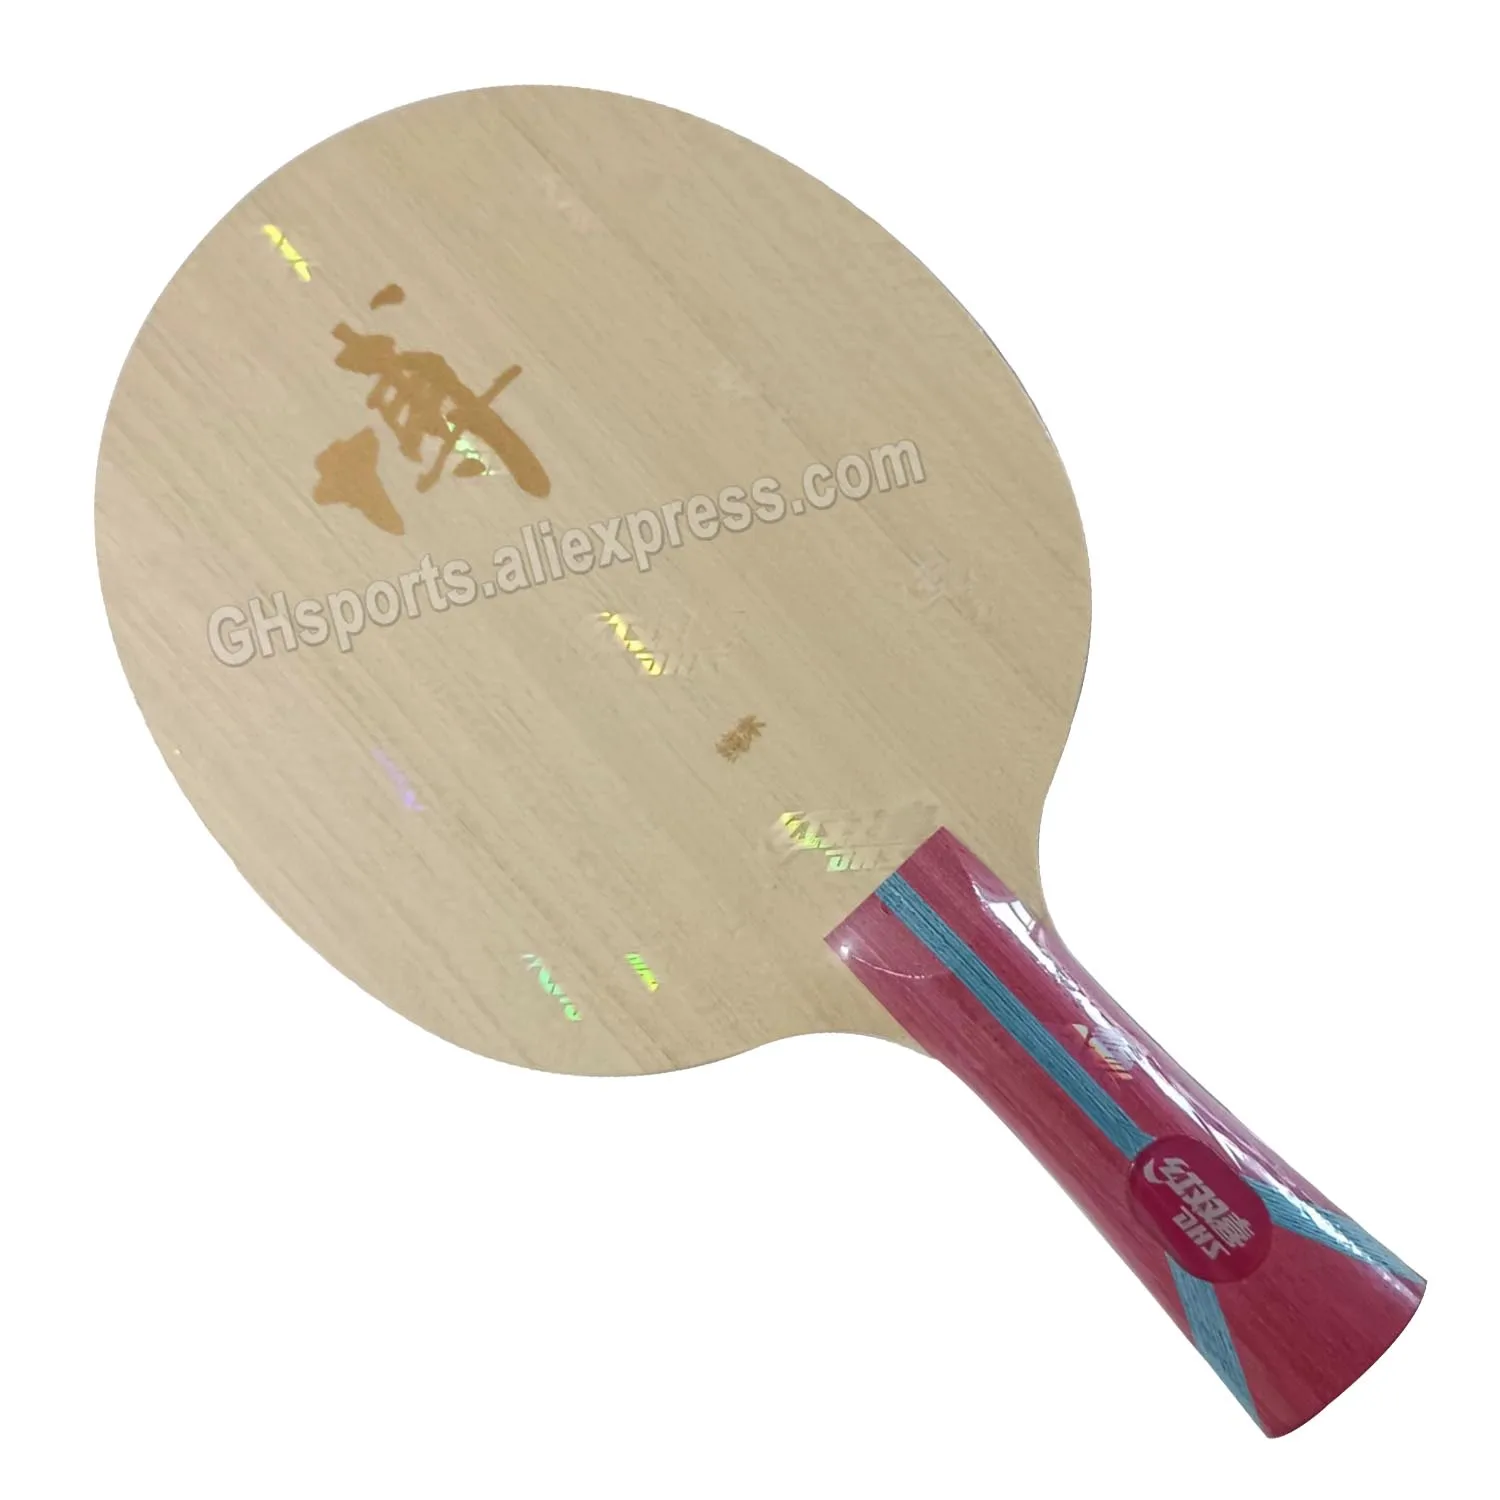 DHS Hurricane BO (Hurricane B) for Fang Bo Table Tennis Blade (7 Ply Wood) Racket Ping Pong Bat Paddle